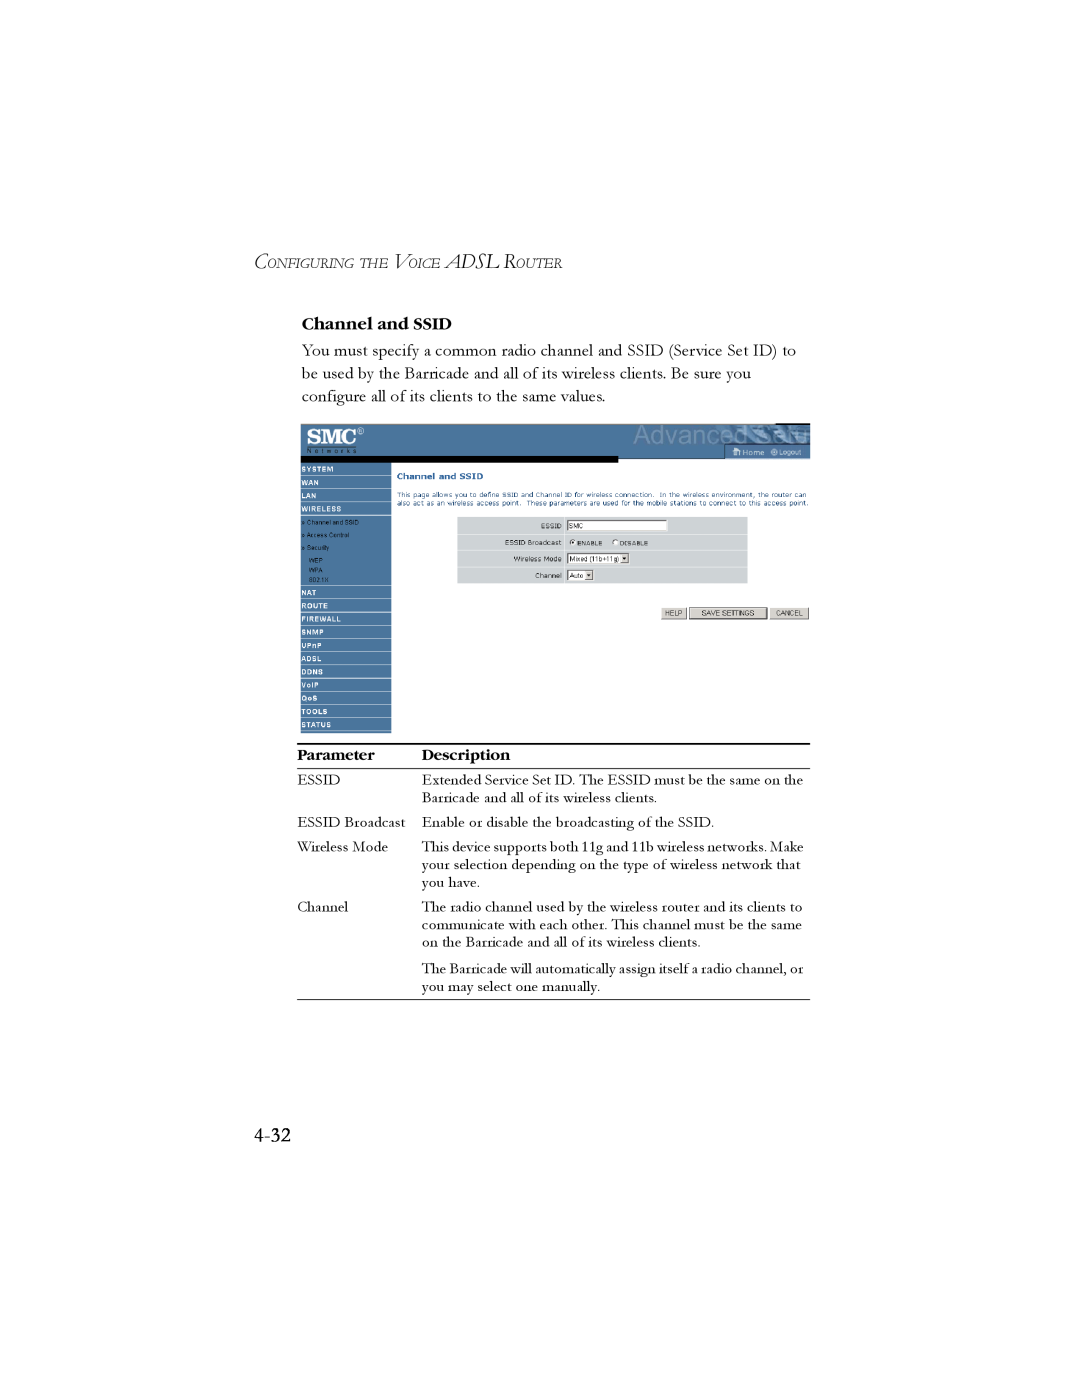 SMC Networks SMC7908VoWBRA manual 4-32, Channel and SSID, Parameter, Description 